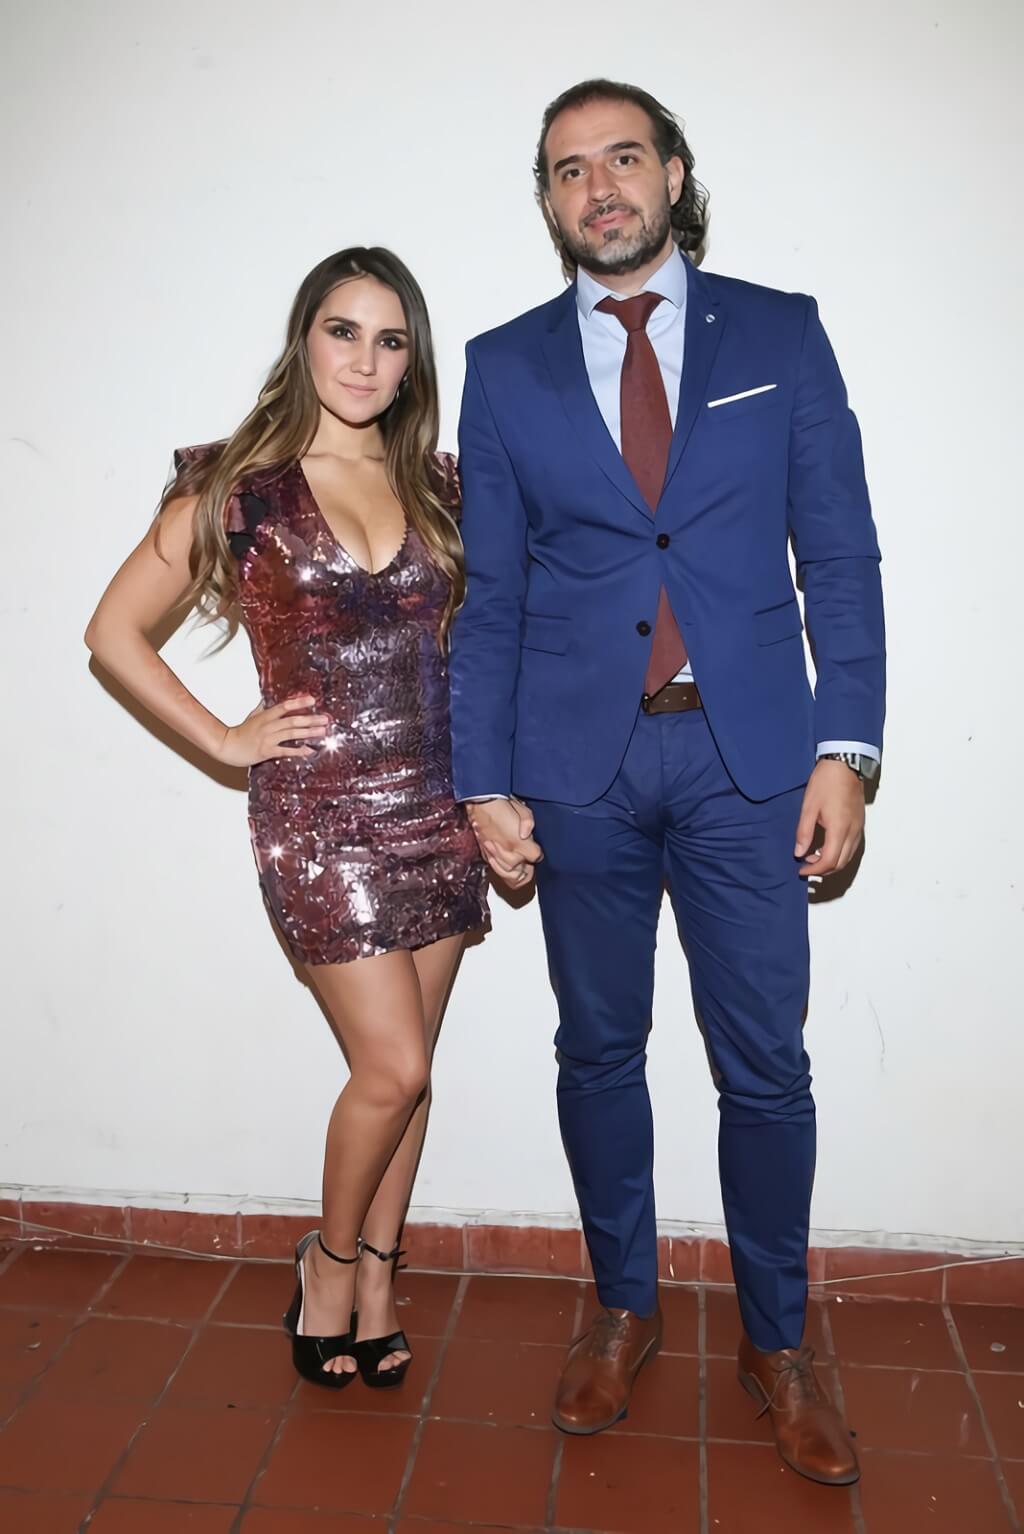 Paco Álvarez and Dulce Maria image